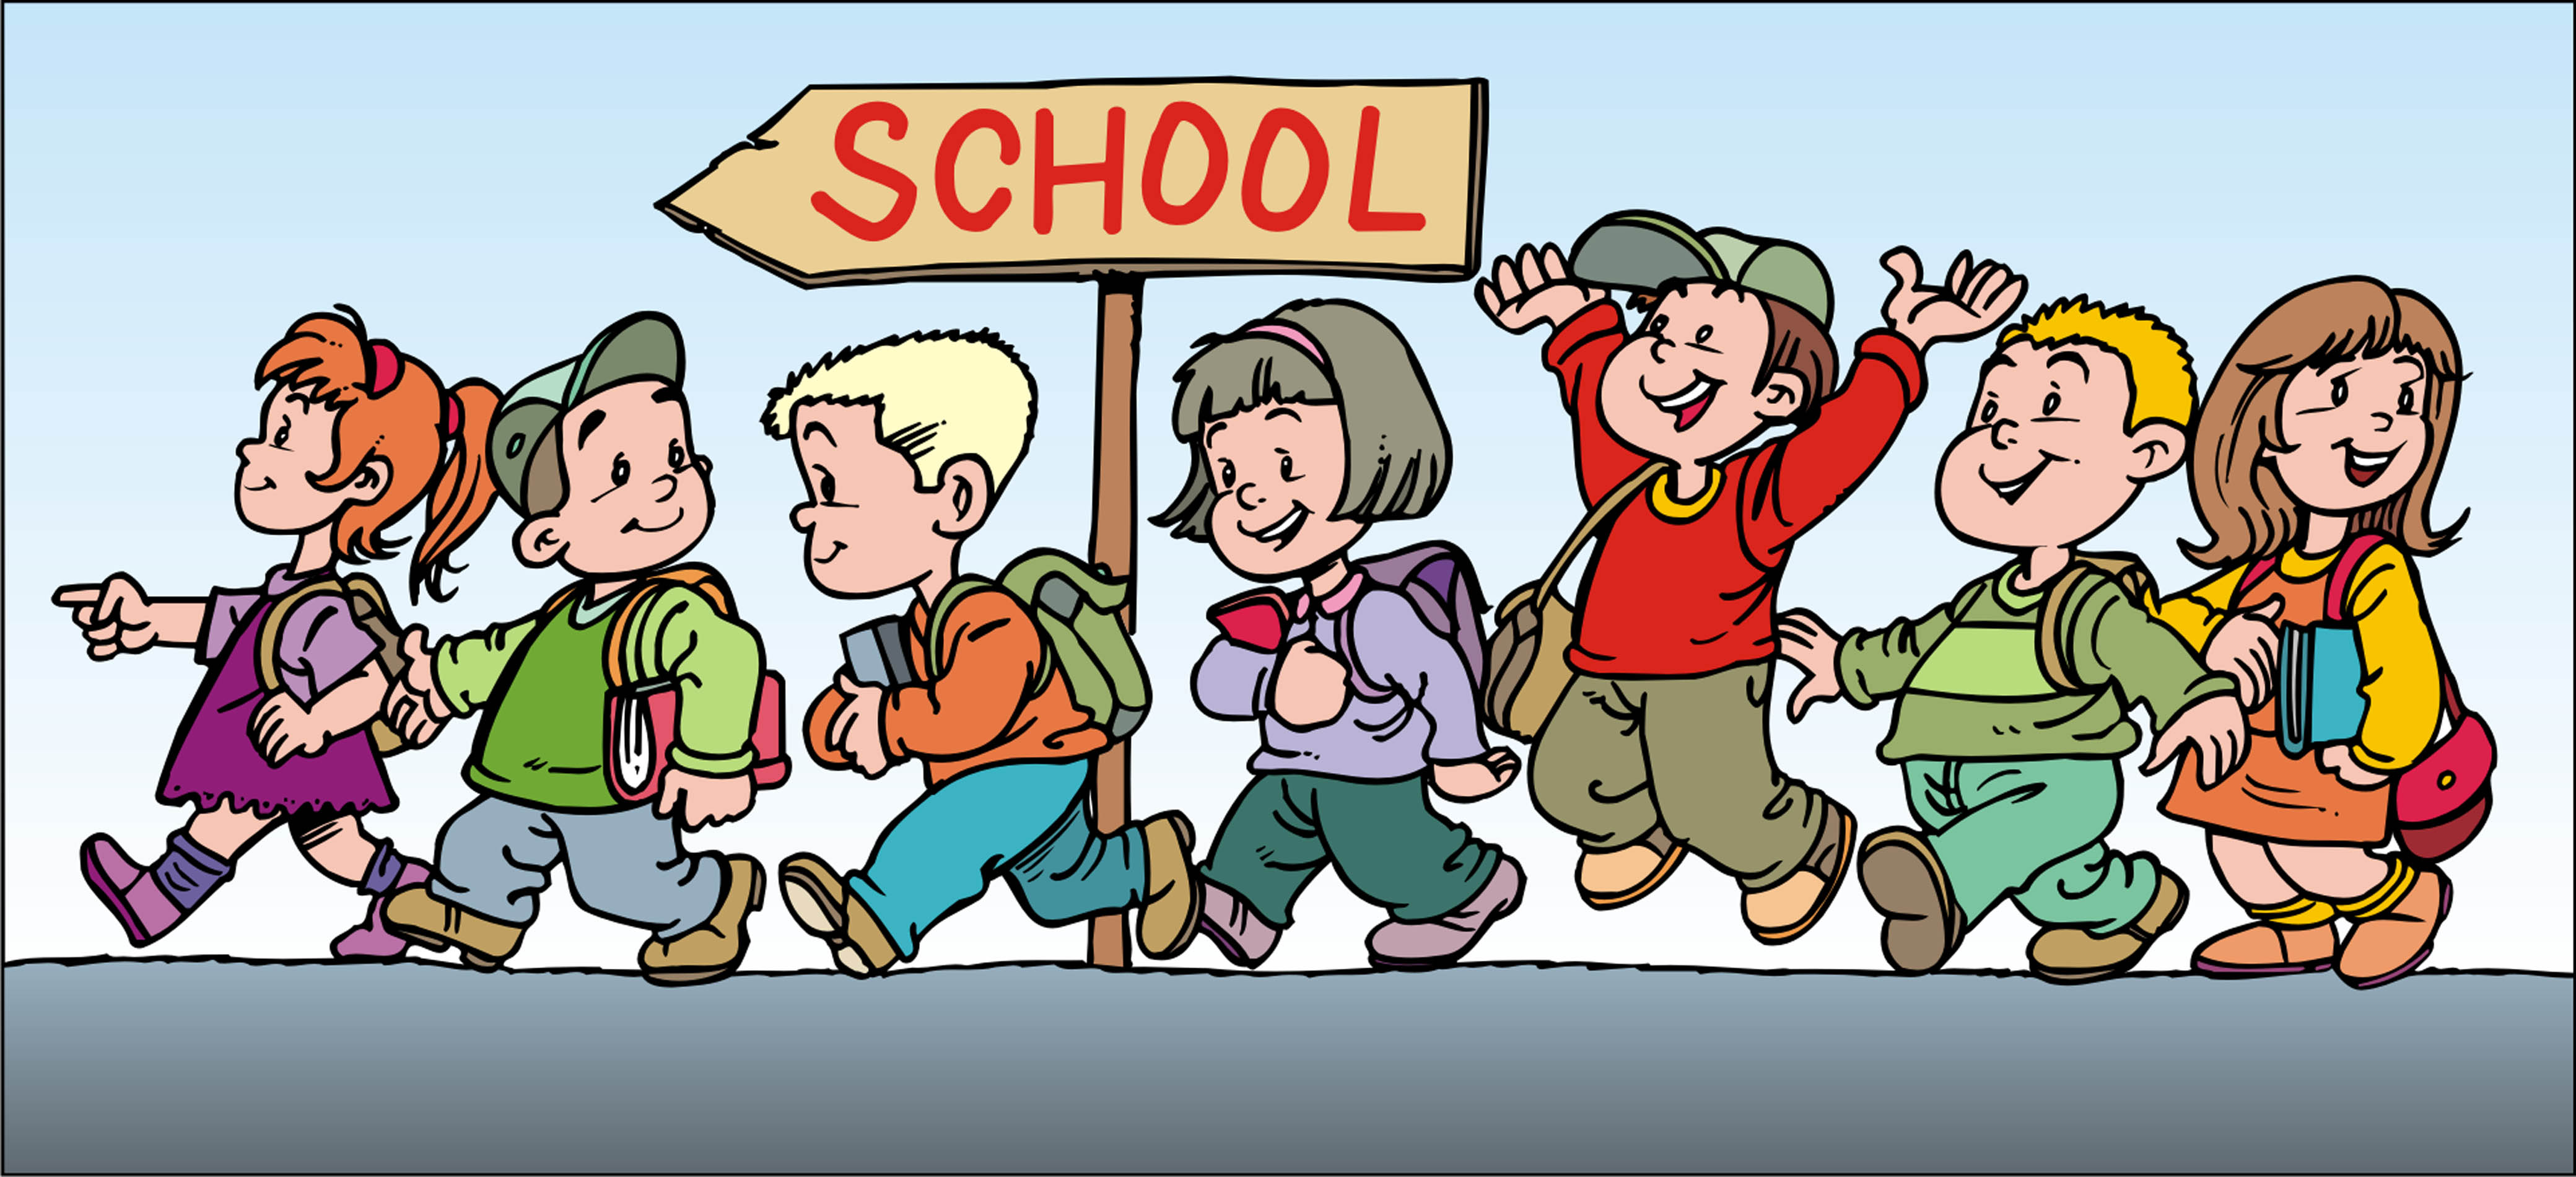 Next week i to go to school. Go to School картинка для детей. Дети бегут в школу. Ребенок идет. Дети около школы картинка.